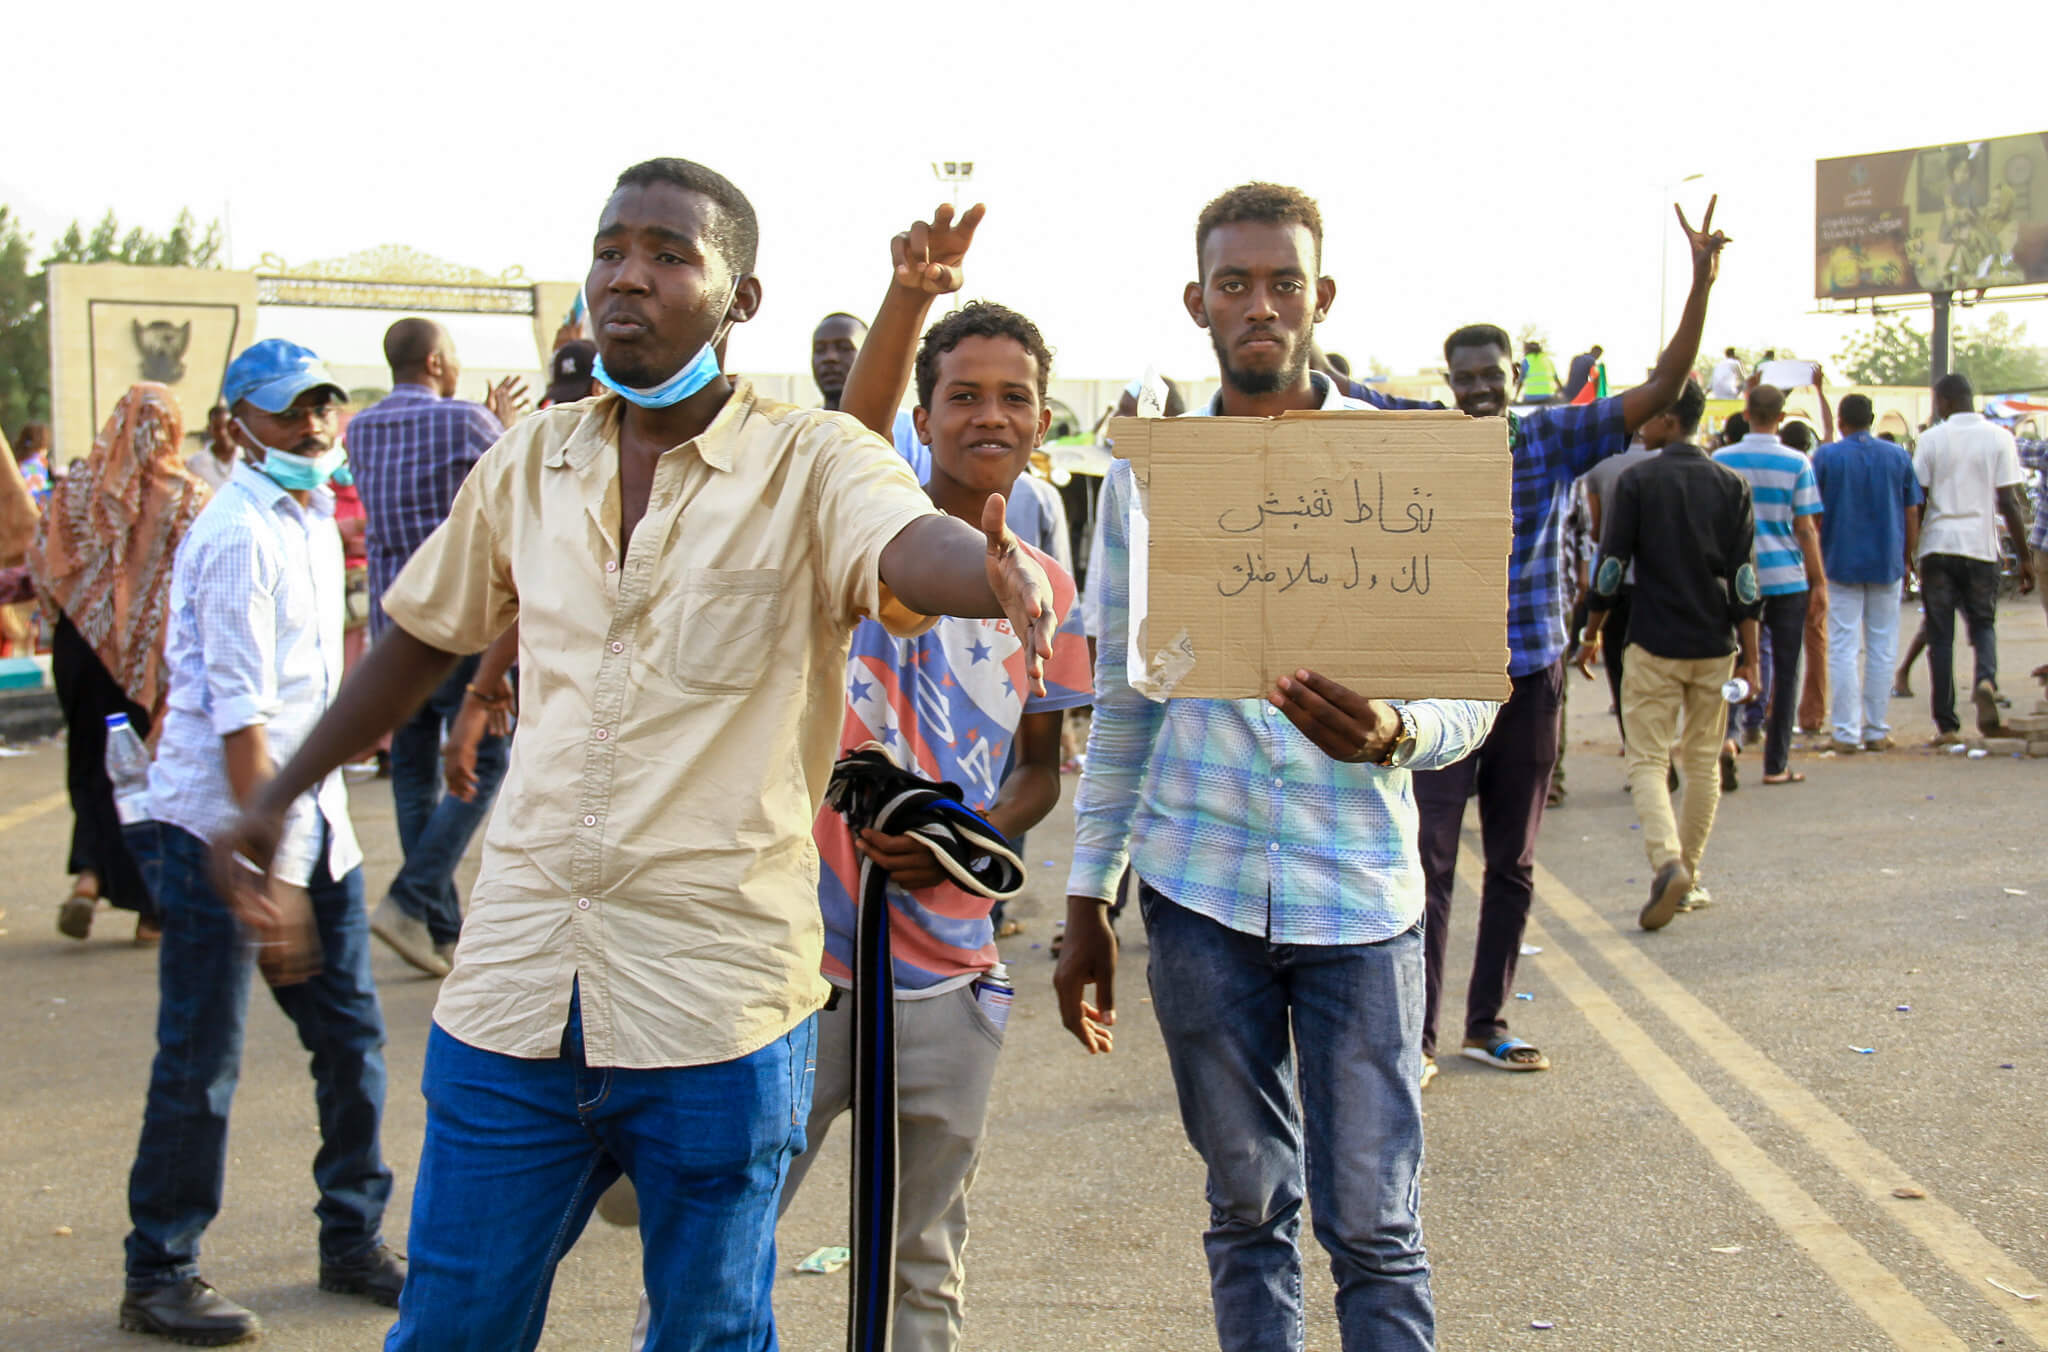 Protests on the streets of Darfur, Sudan, april 2019. ©Flickr/Hind Mekki